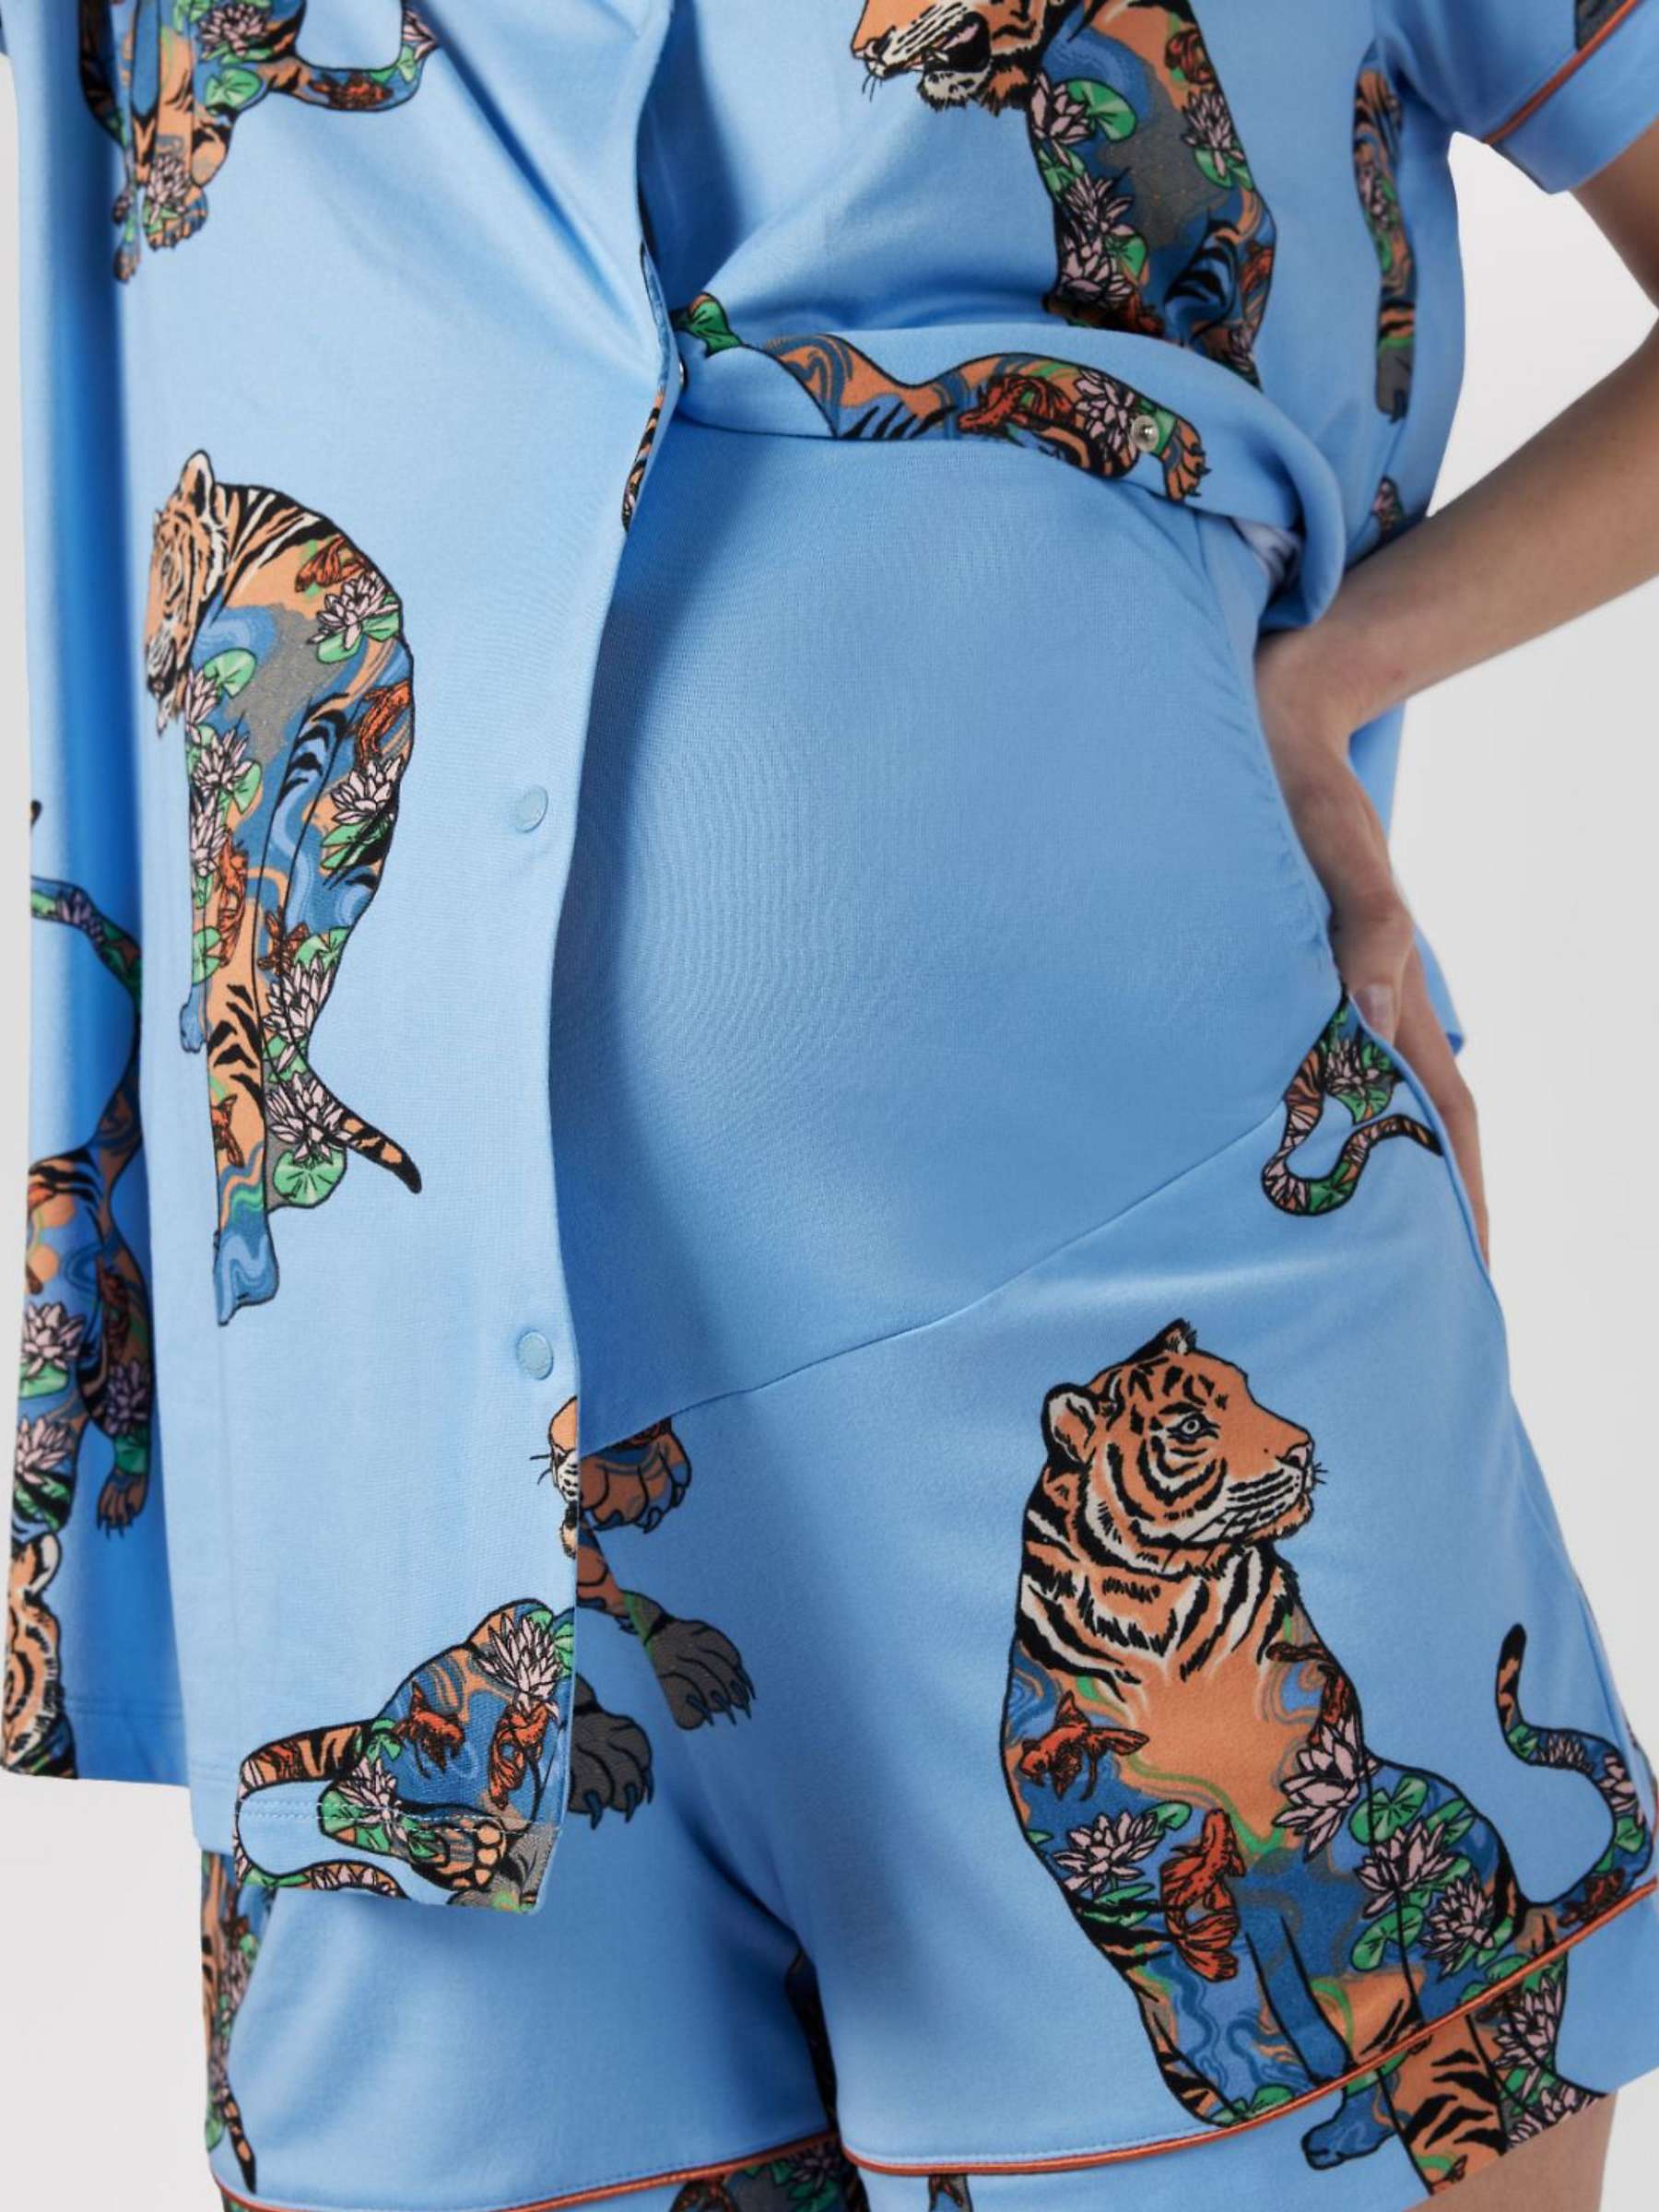 Buy Chelsea Peers Maternity Lotus Tiger Print Pyjama Set Online at johnlewis.com